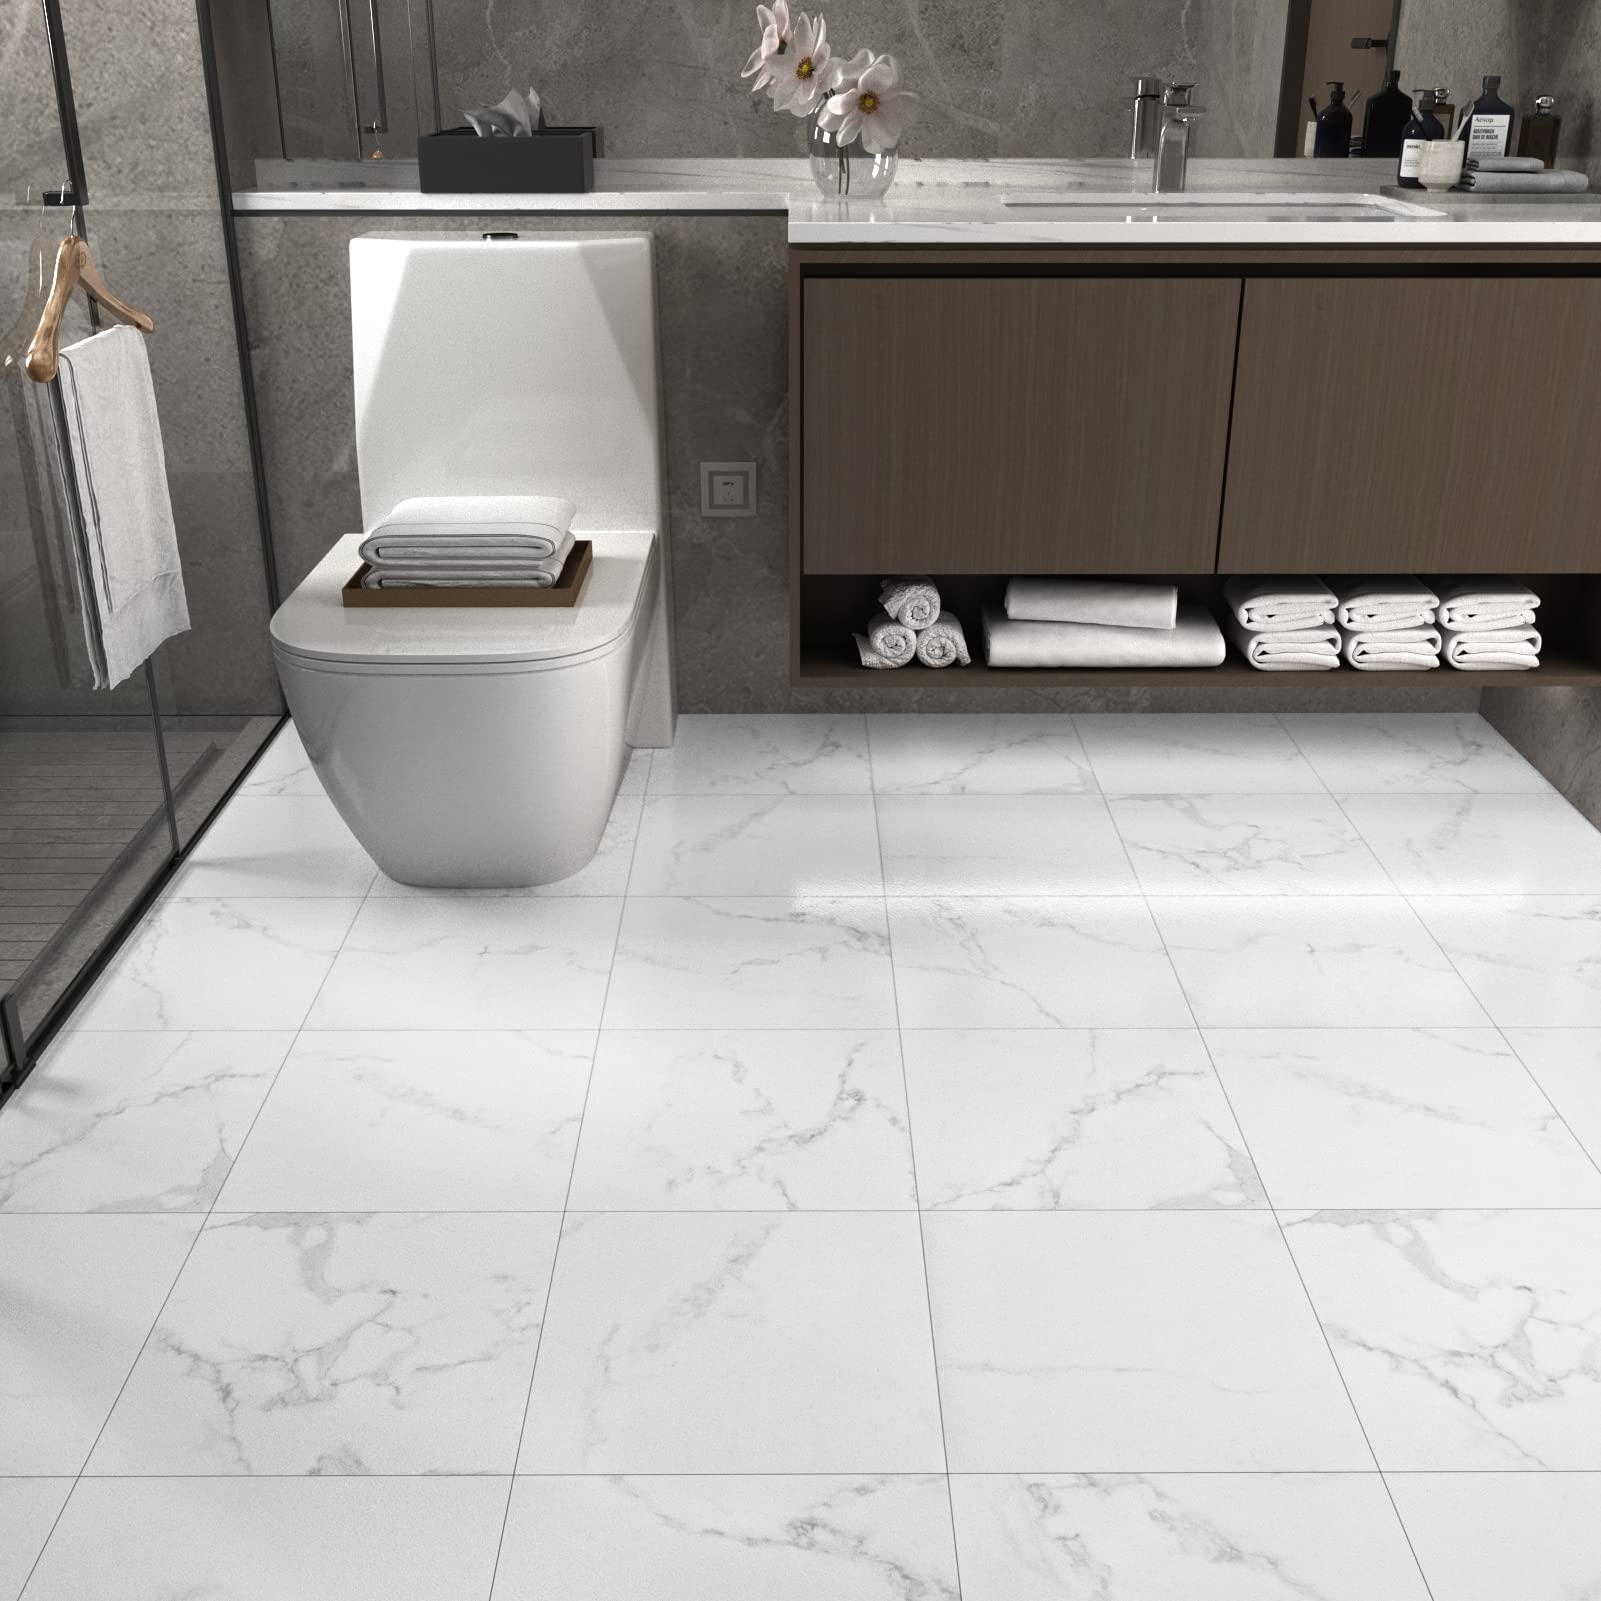 Bathroom floor plan ideas